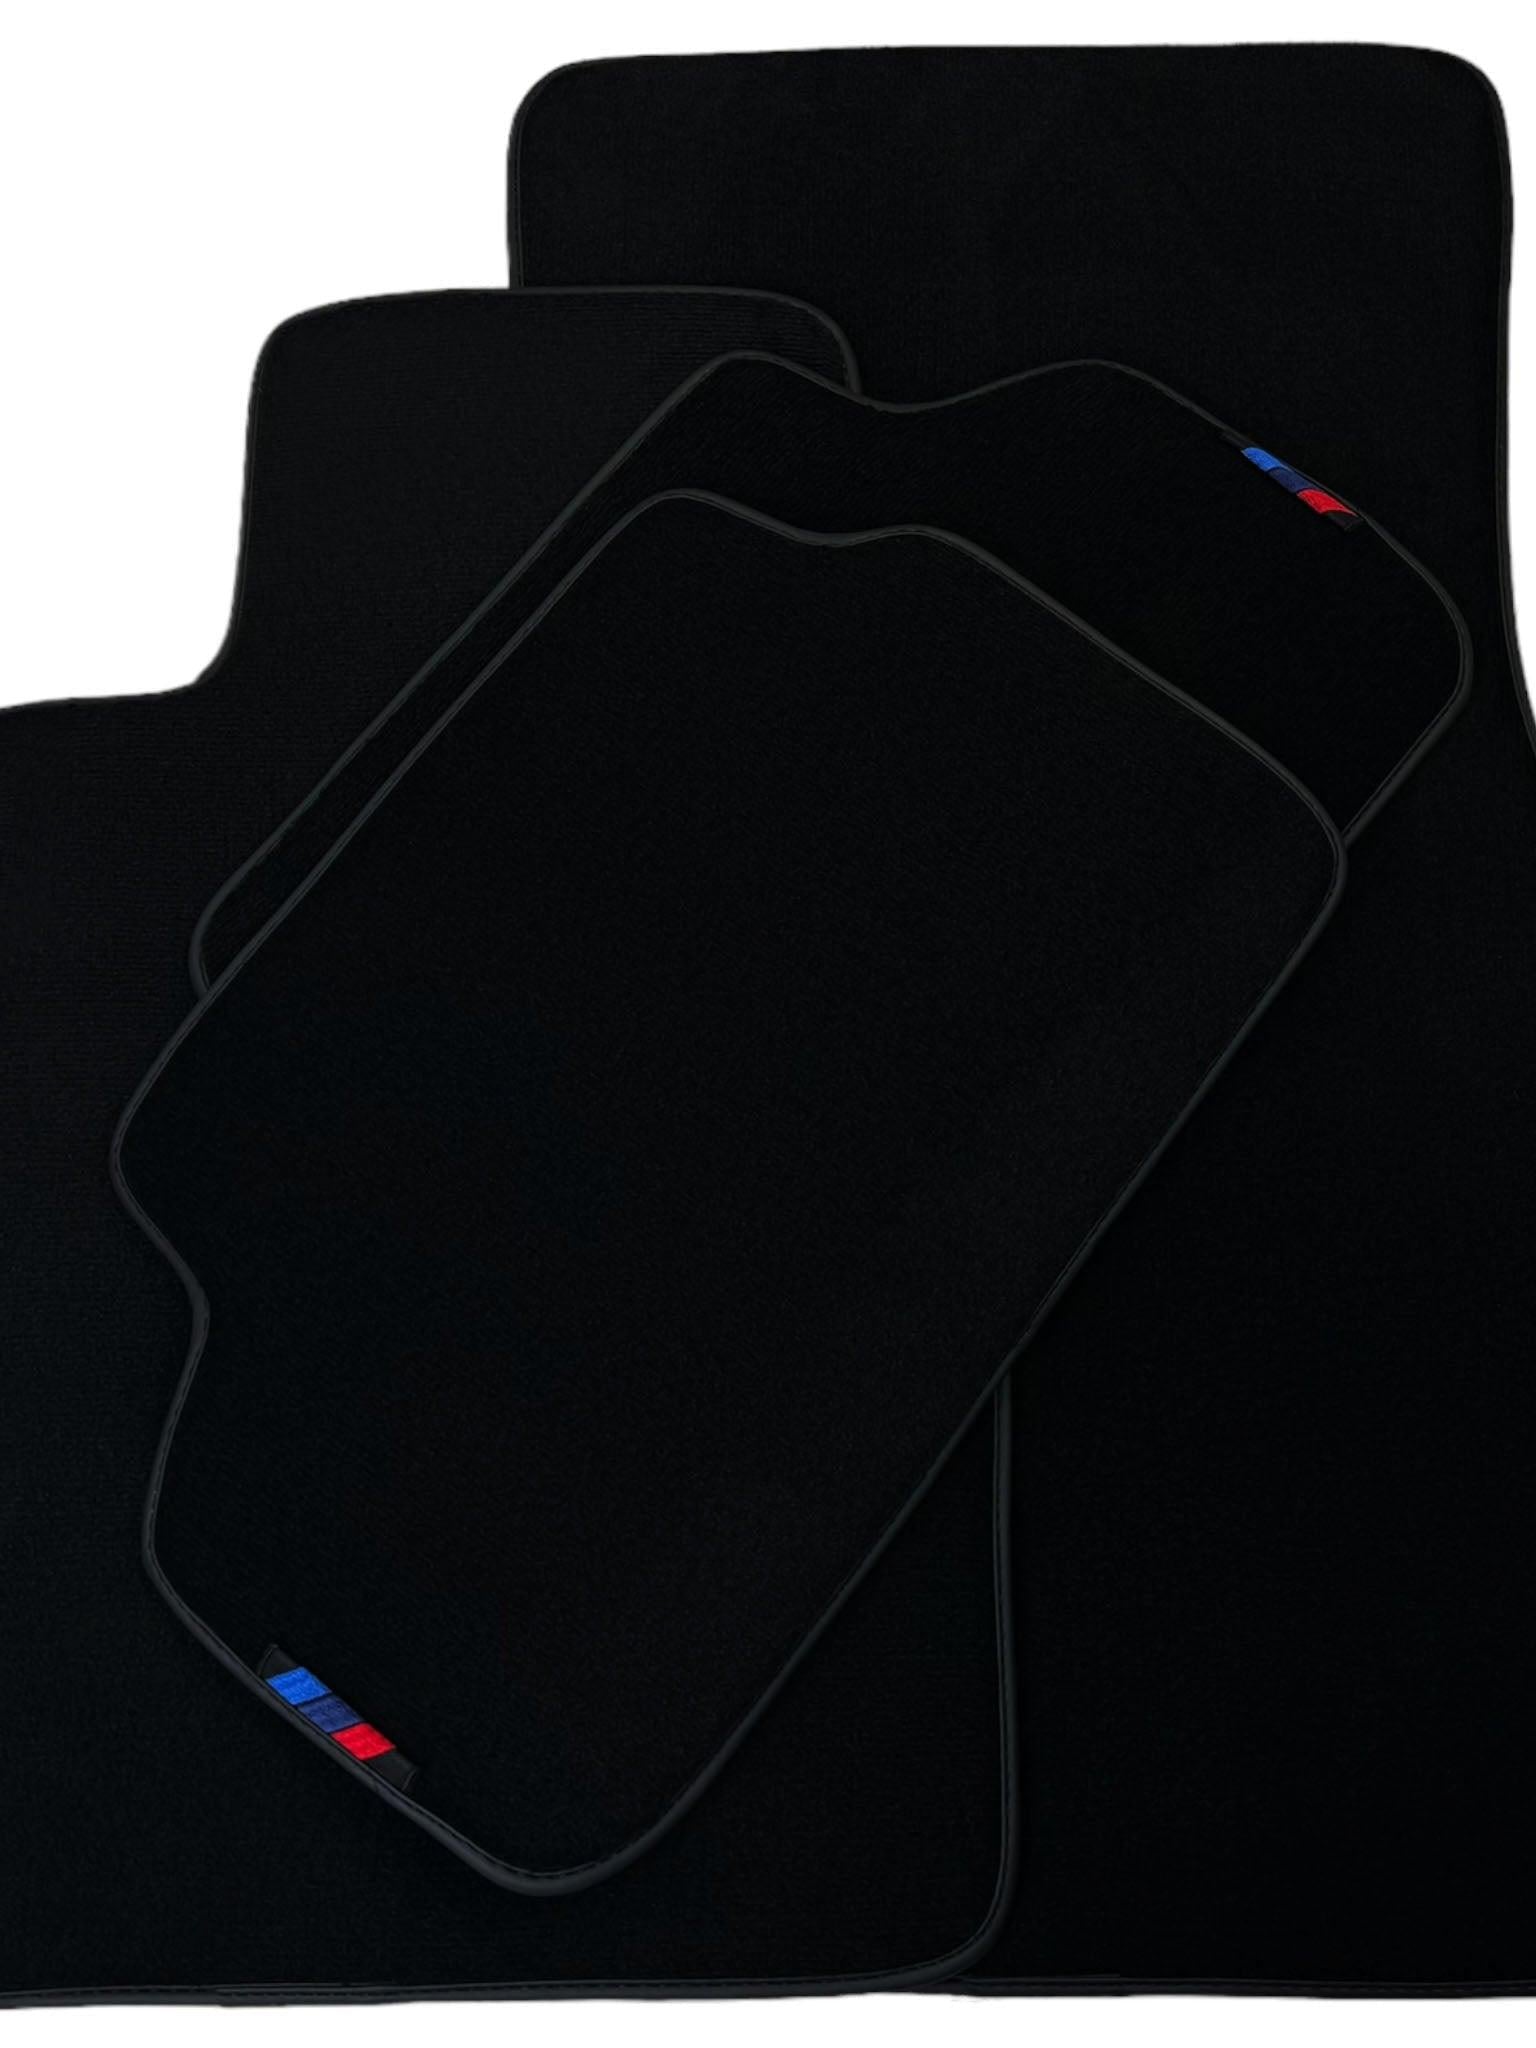 Black Floor Floor Mats For BMW M5 Series F90 | Fighter Jet Edition AutoWin Brand |Black Trim